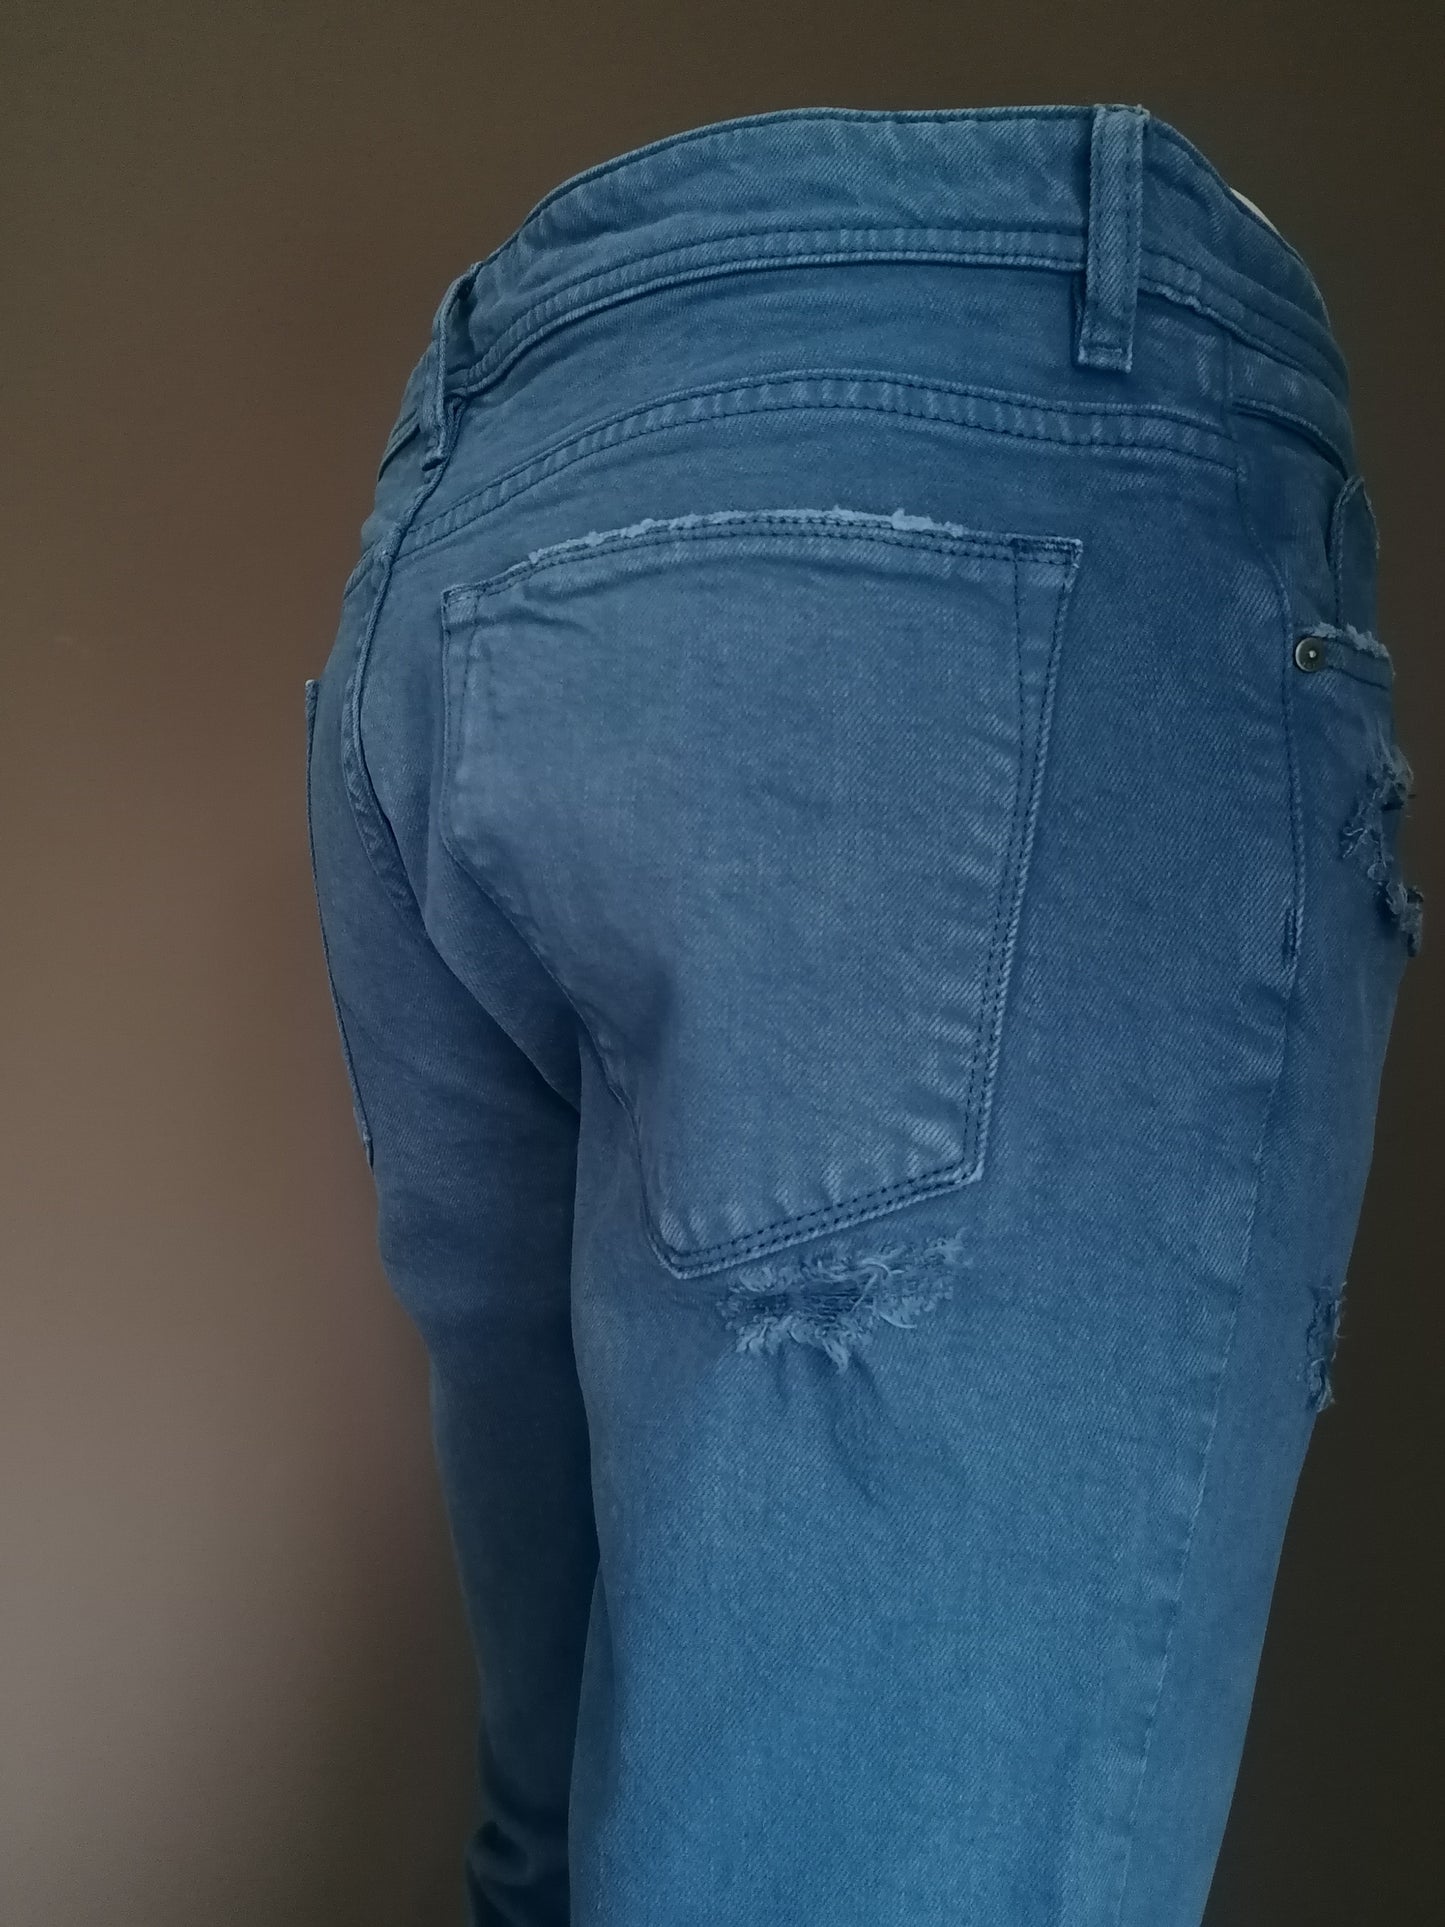 PGT Ripped Jeans. Couleur bleue. Taille W32 - L32.